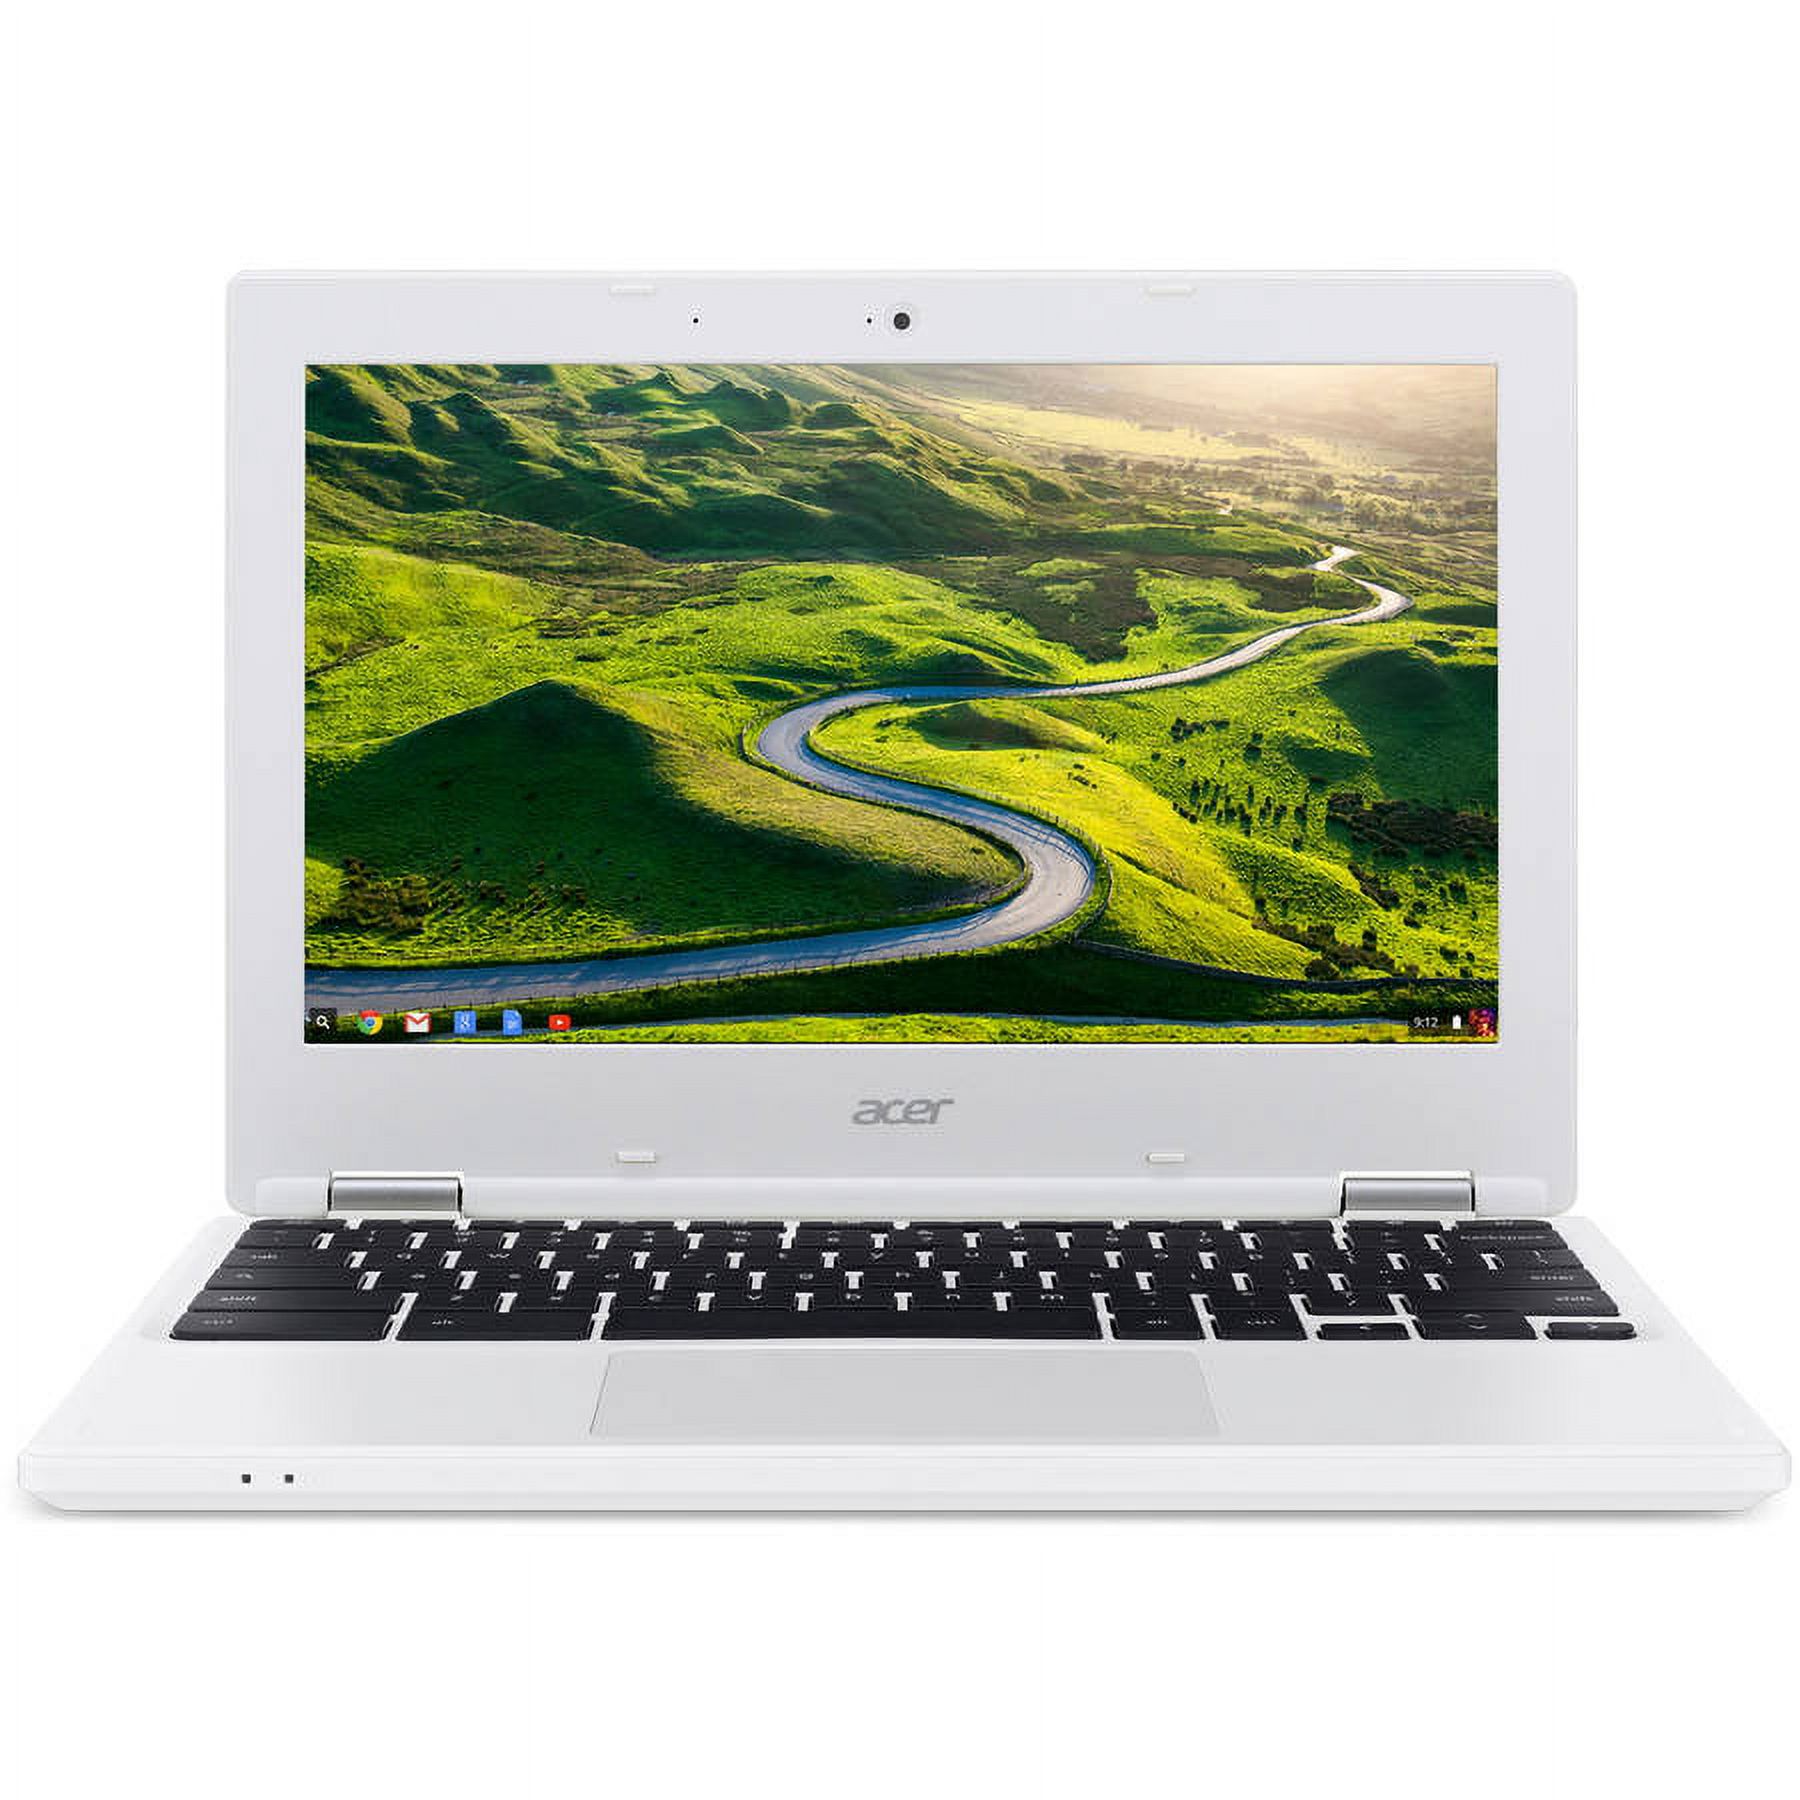 Acer Denim White 11.6" CB3-131-C3SZ Chromebook 11 PC with Intel Celeron N2840 Dual-Core Processor, 2GB Memory, 16GB Flash Storage and Google Chrome - image 2 of 8